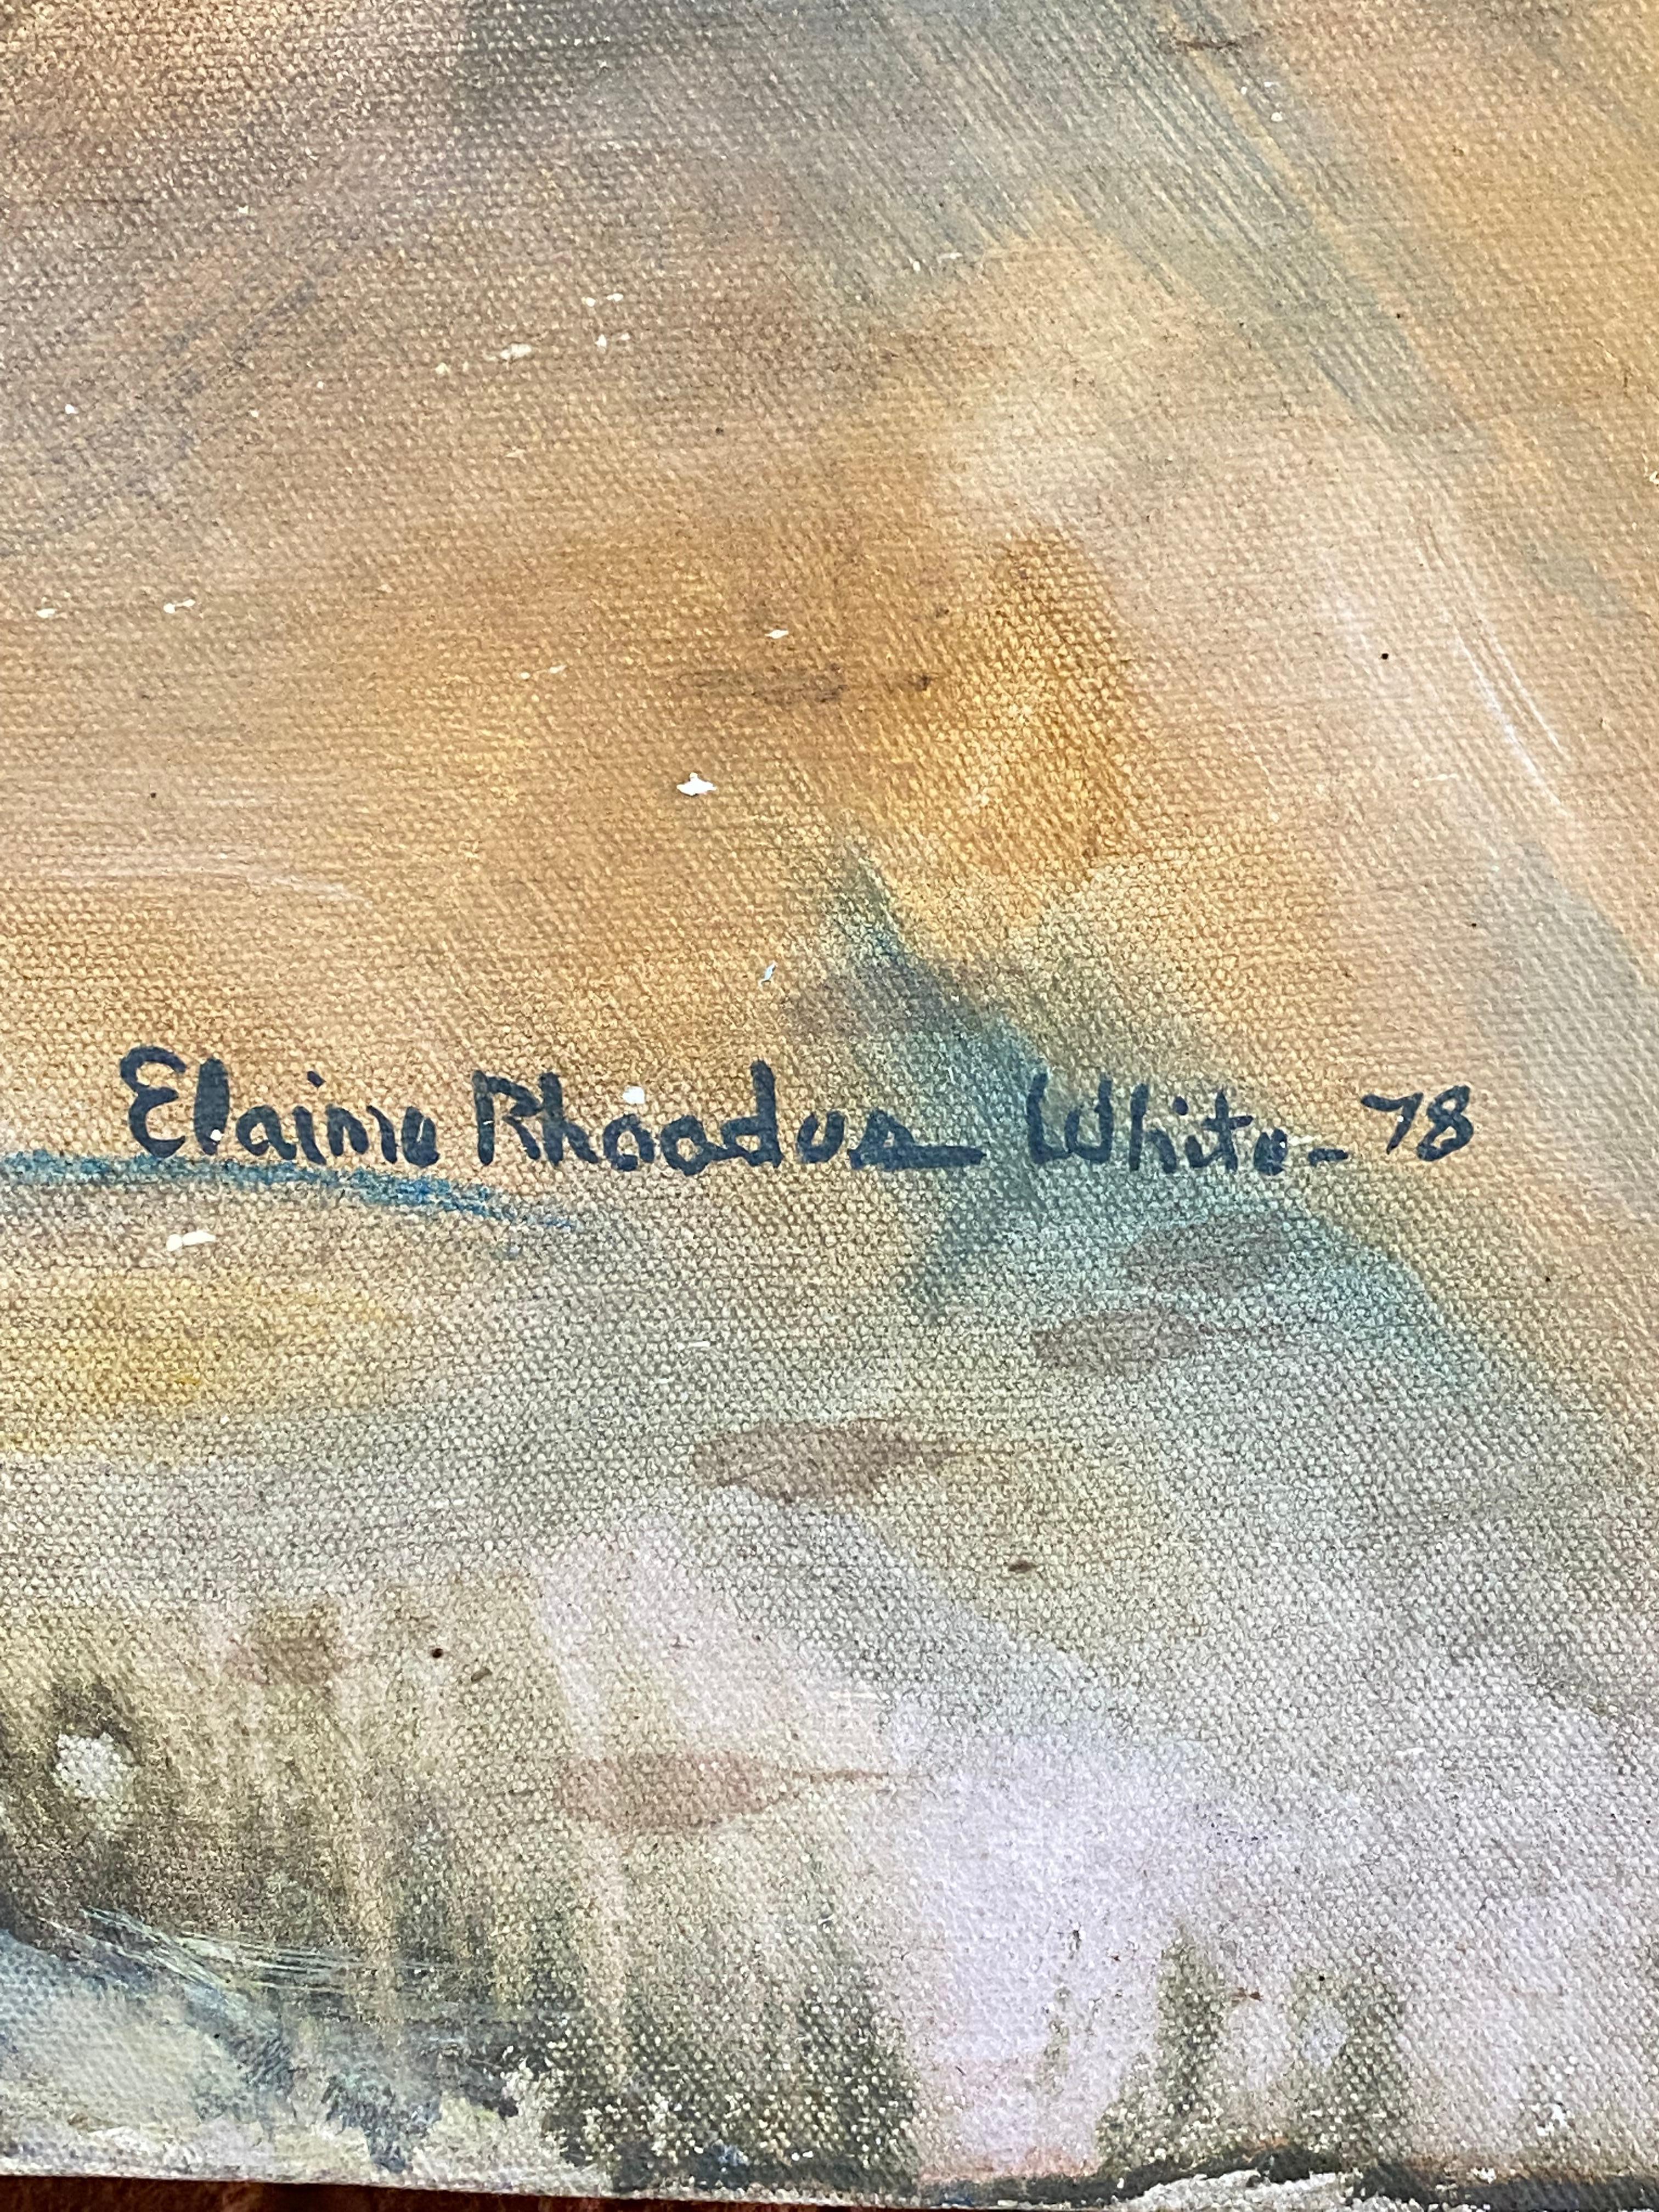 American 1978 Post Modern Elaine Rhoades White Wild Horses Painting